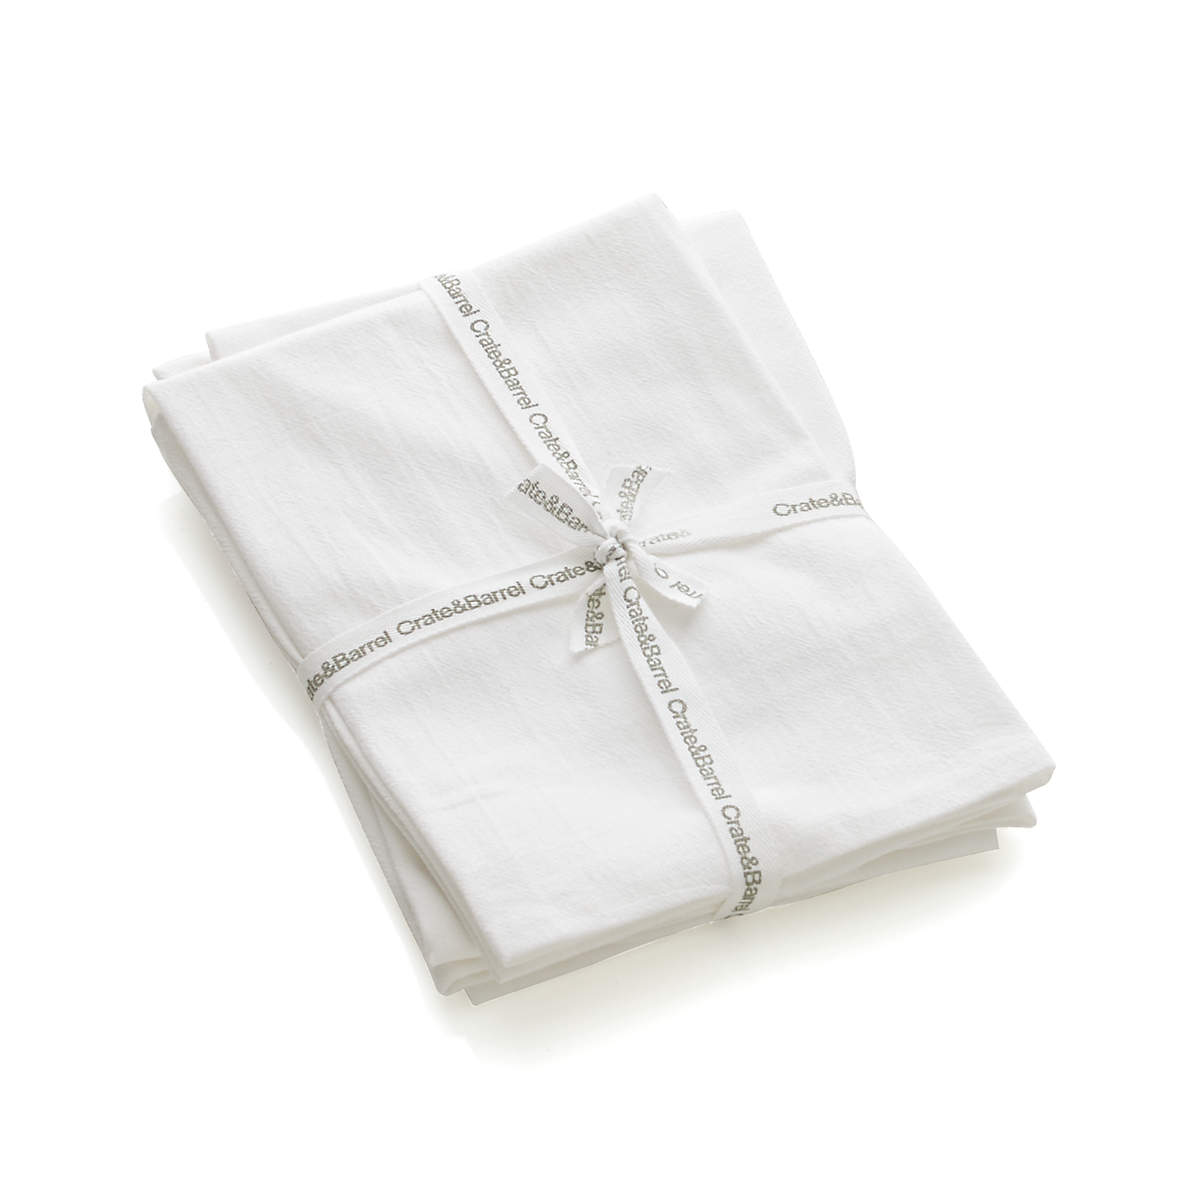 Flour Sack Towel Set of 3 - Blackstone's of Beacon Hill